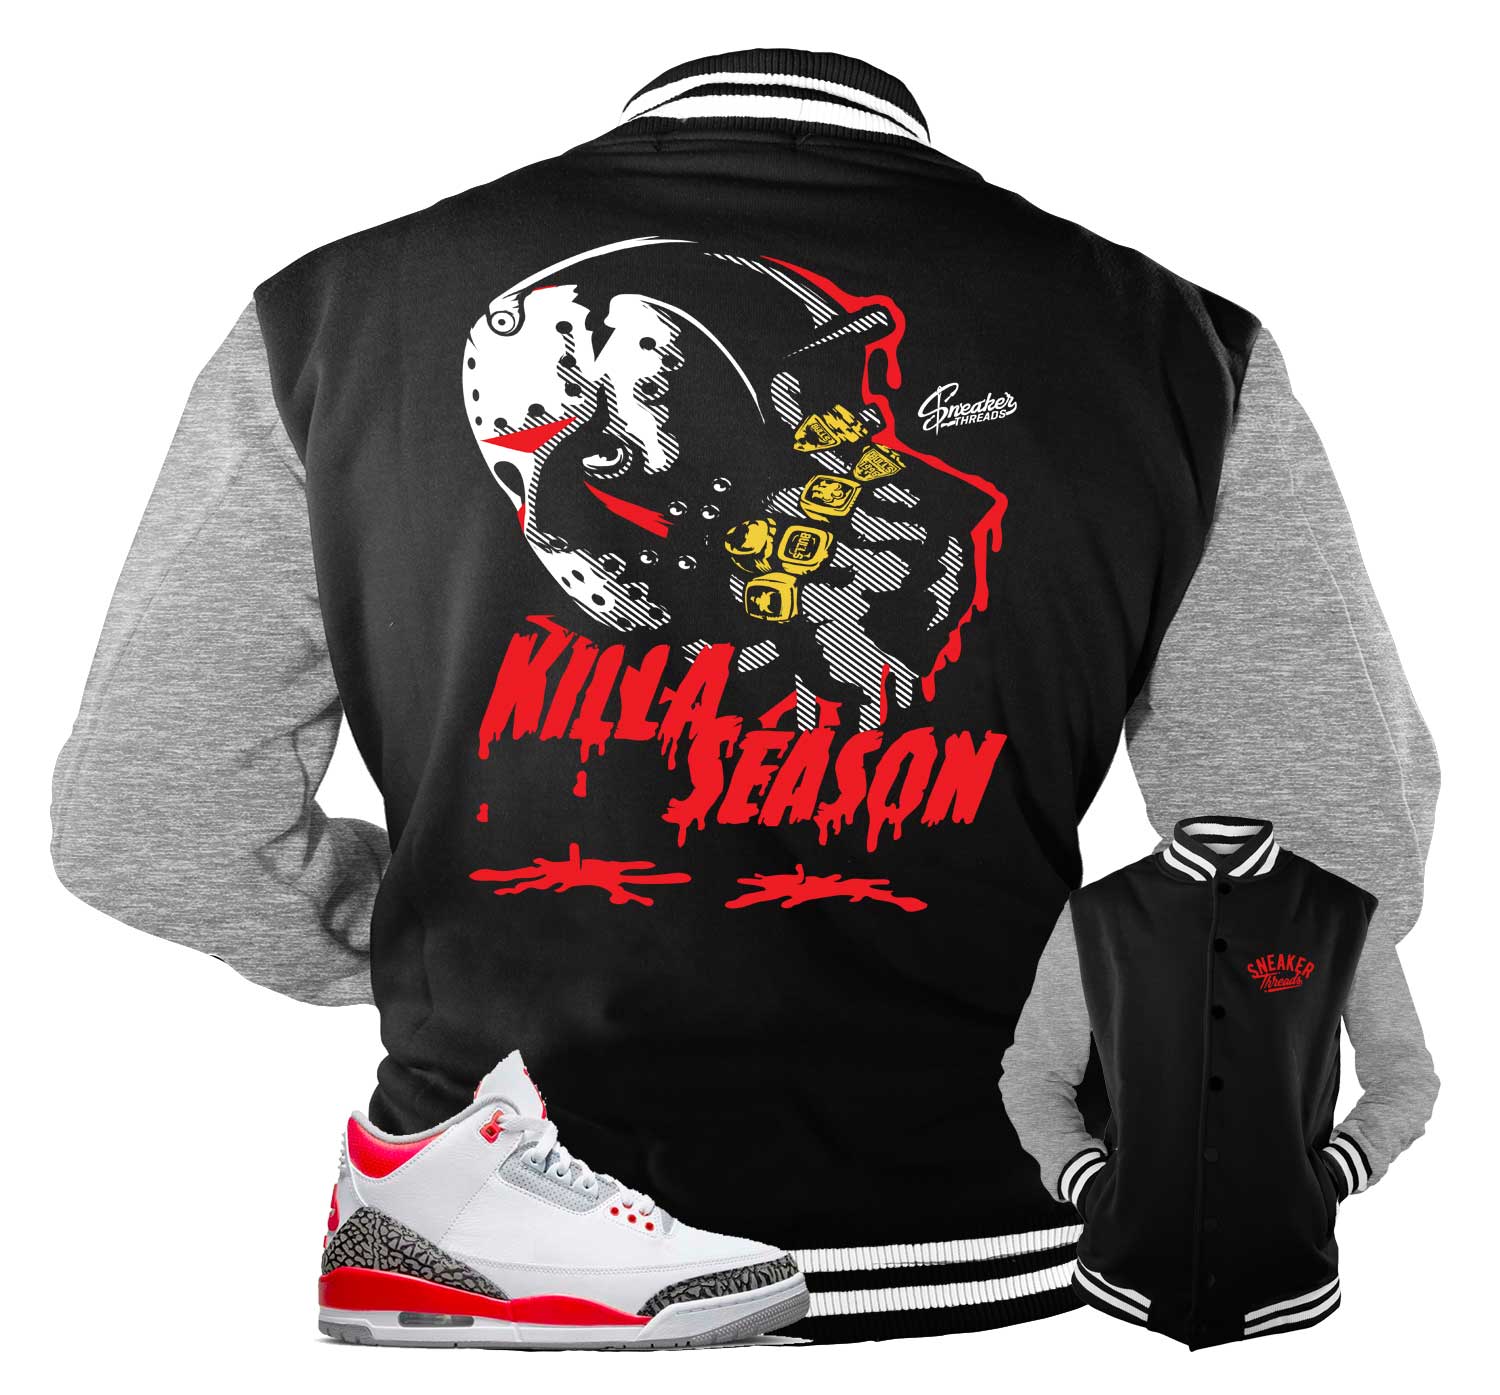 Retro 3 Fire Red Jacket - Killa Season - Black